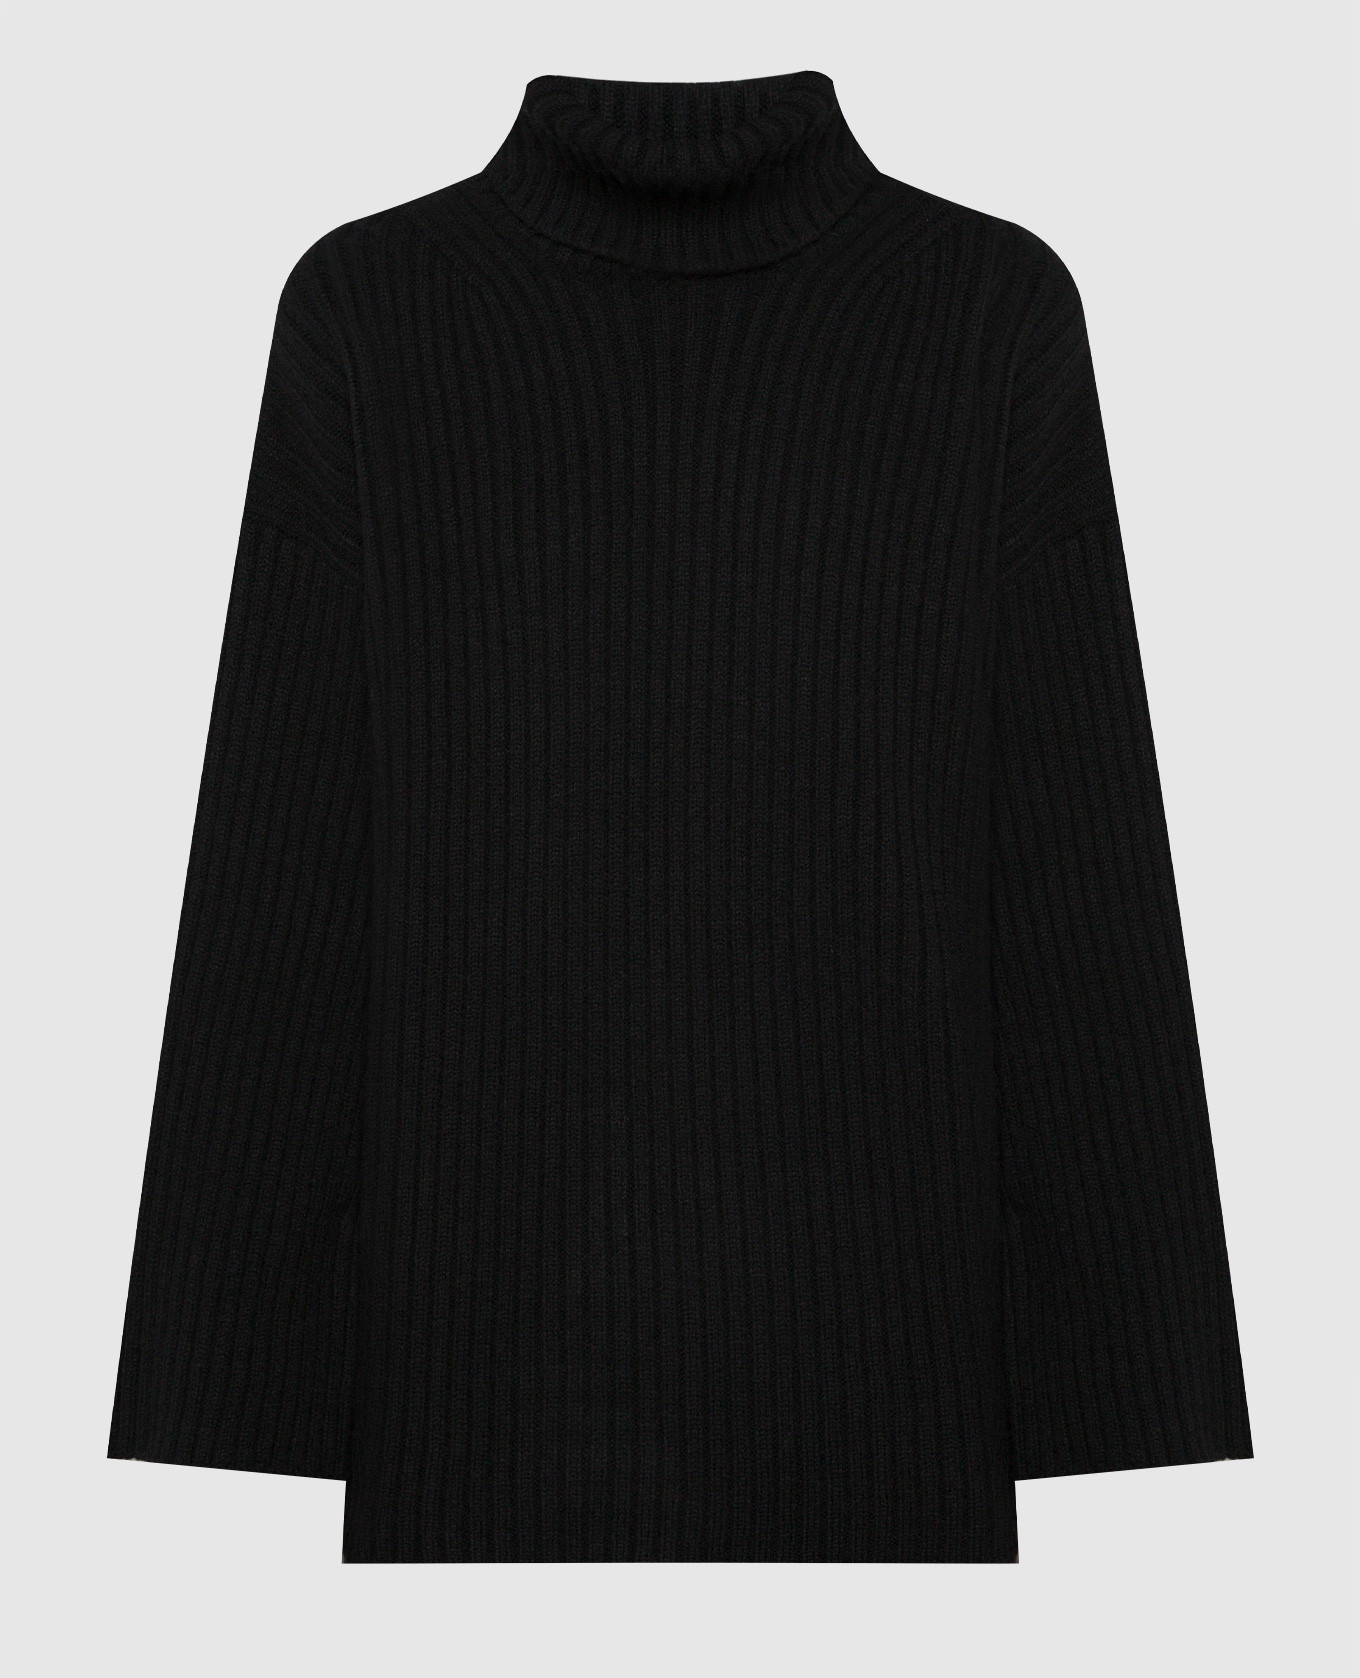 Black ribbed wool sweater